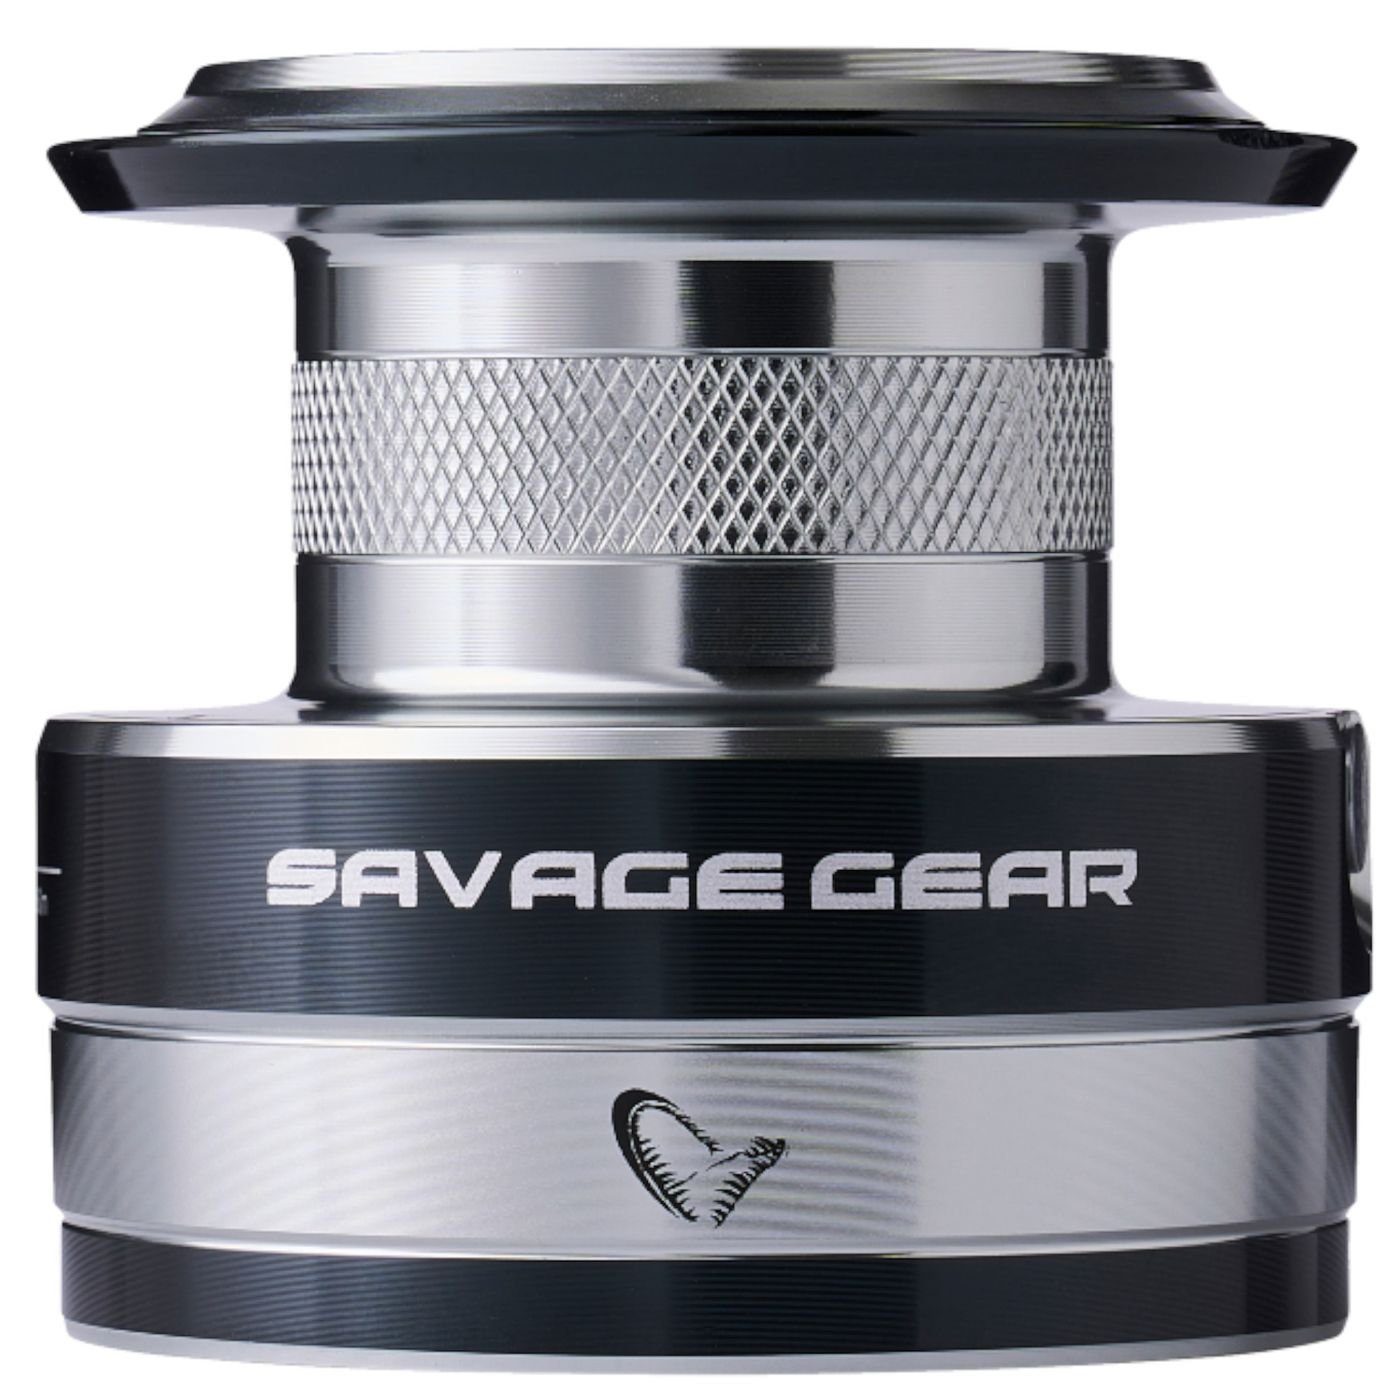 Ersatzspule) Stationärrolle FD Savage SGS8 - Gear Spool Spare 18000